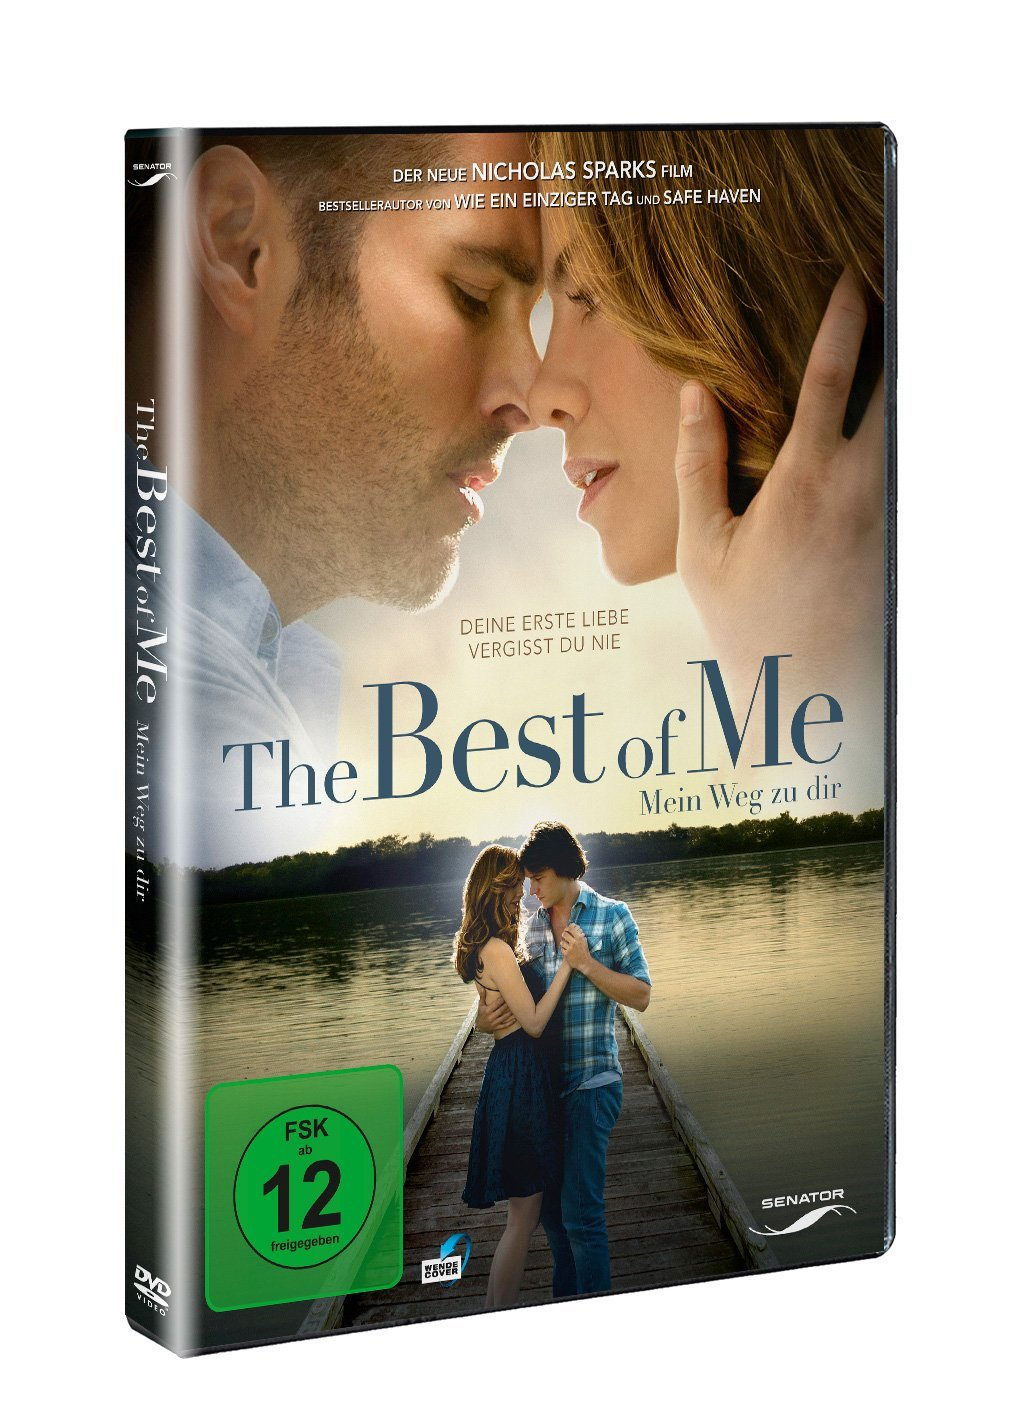 The Best of me - dir Weg Mein zu DVD